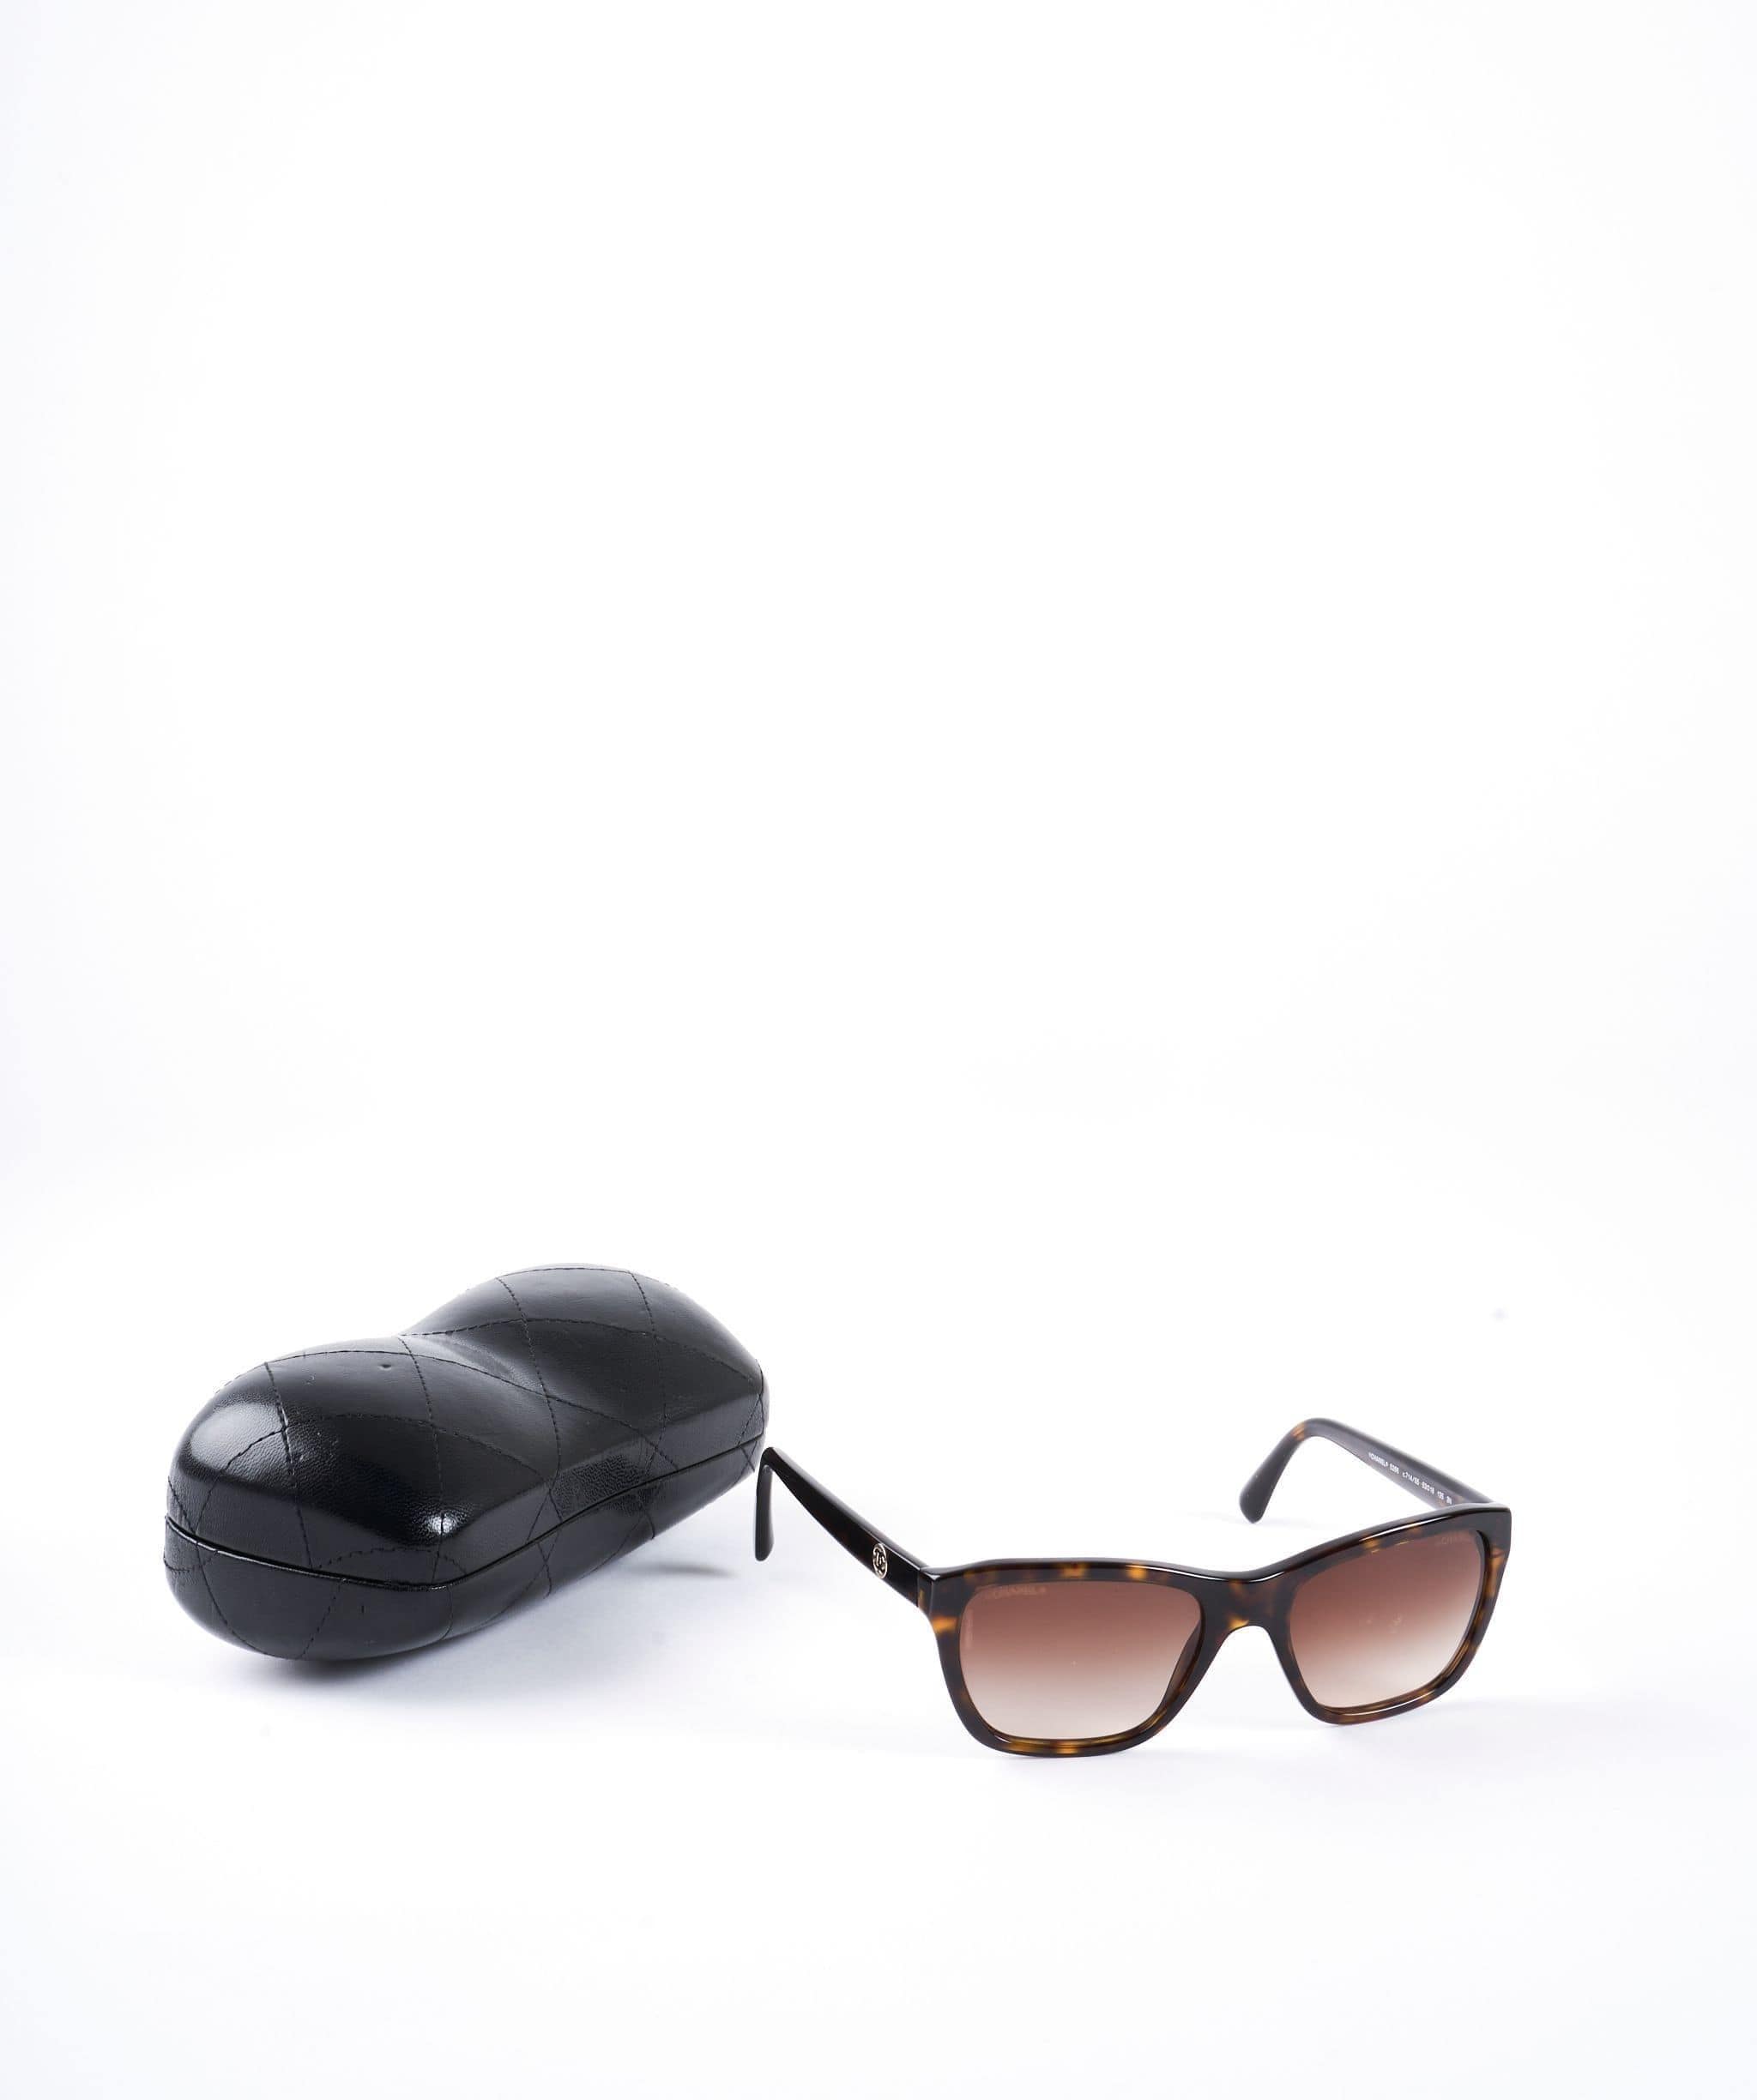 Chanel Chane sunglasses